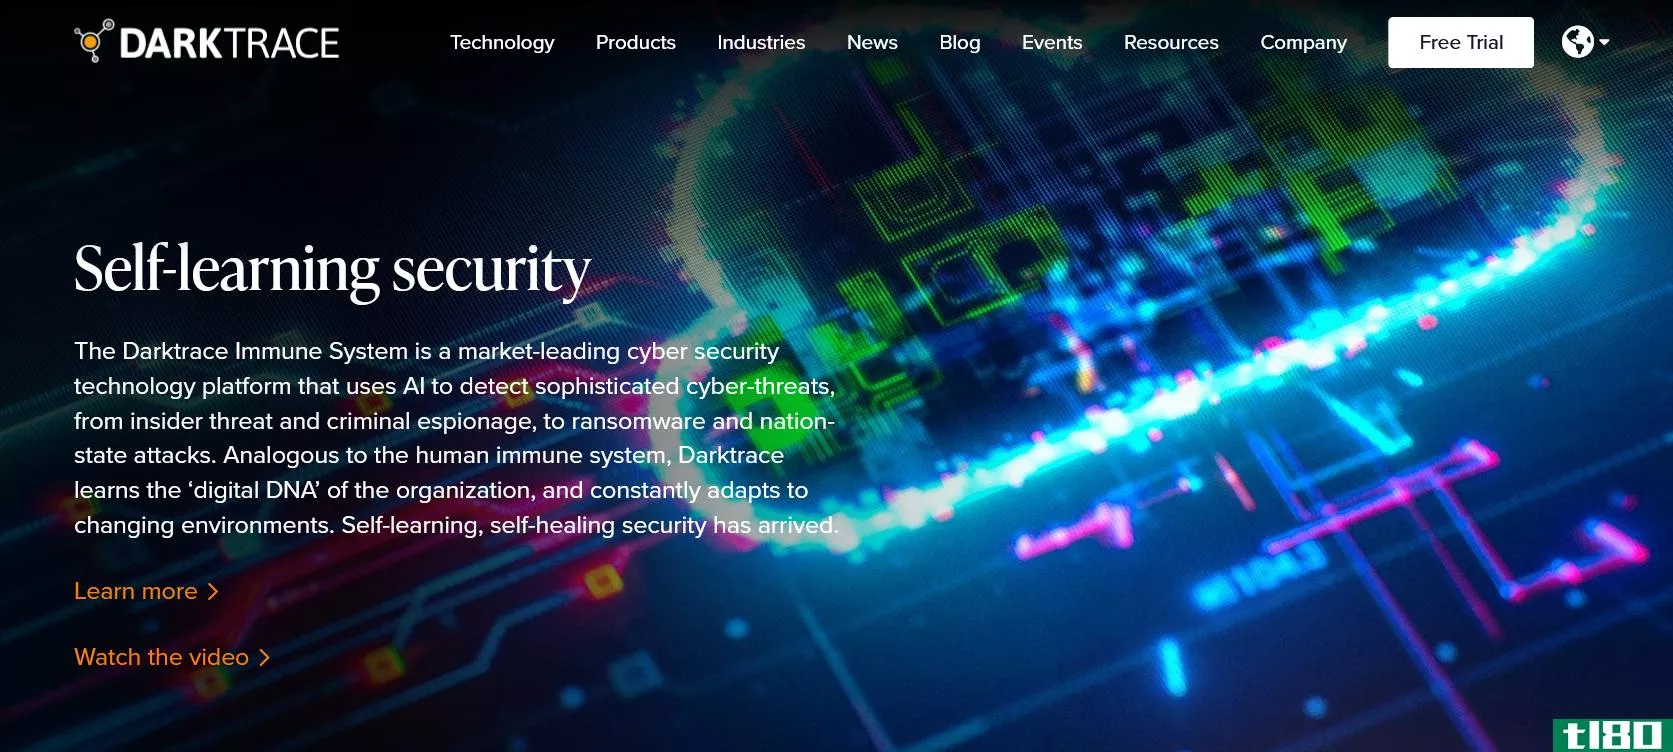 Darktrace Cybersecurity Software